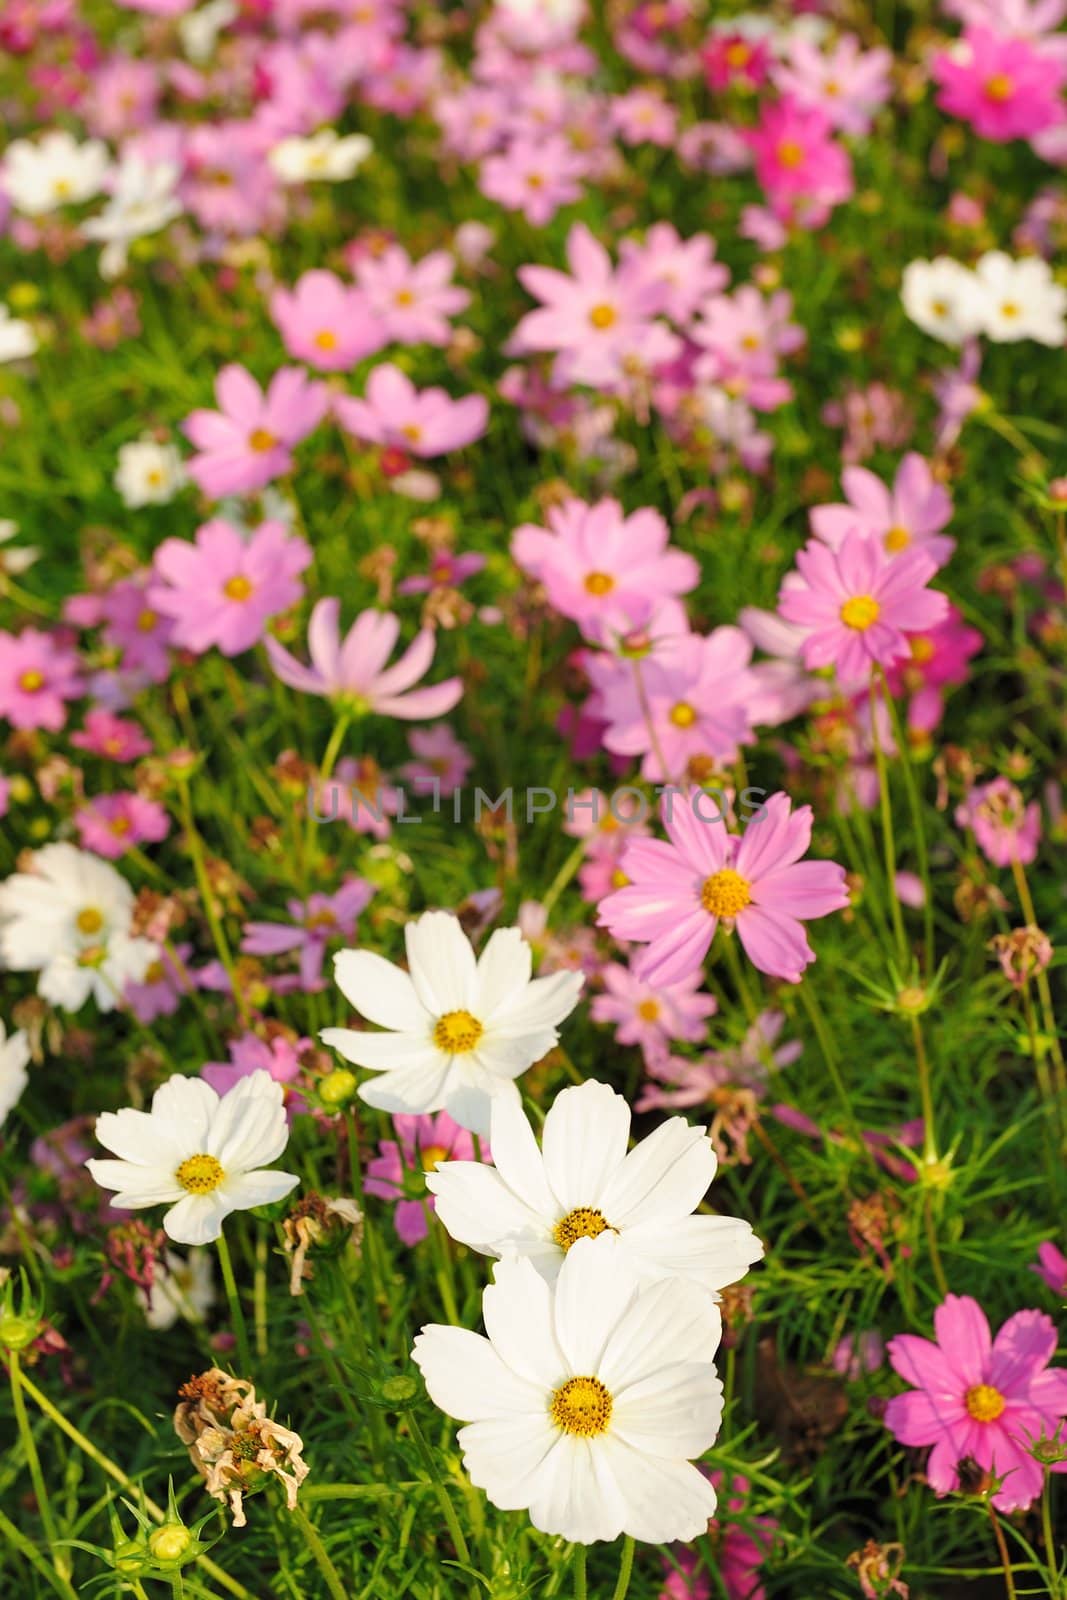 Flowers in garden by raywoo